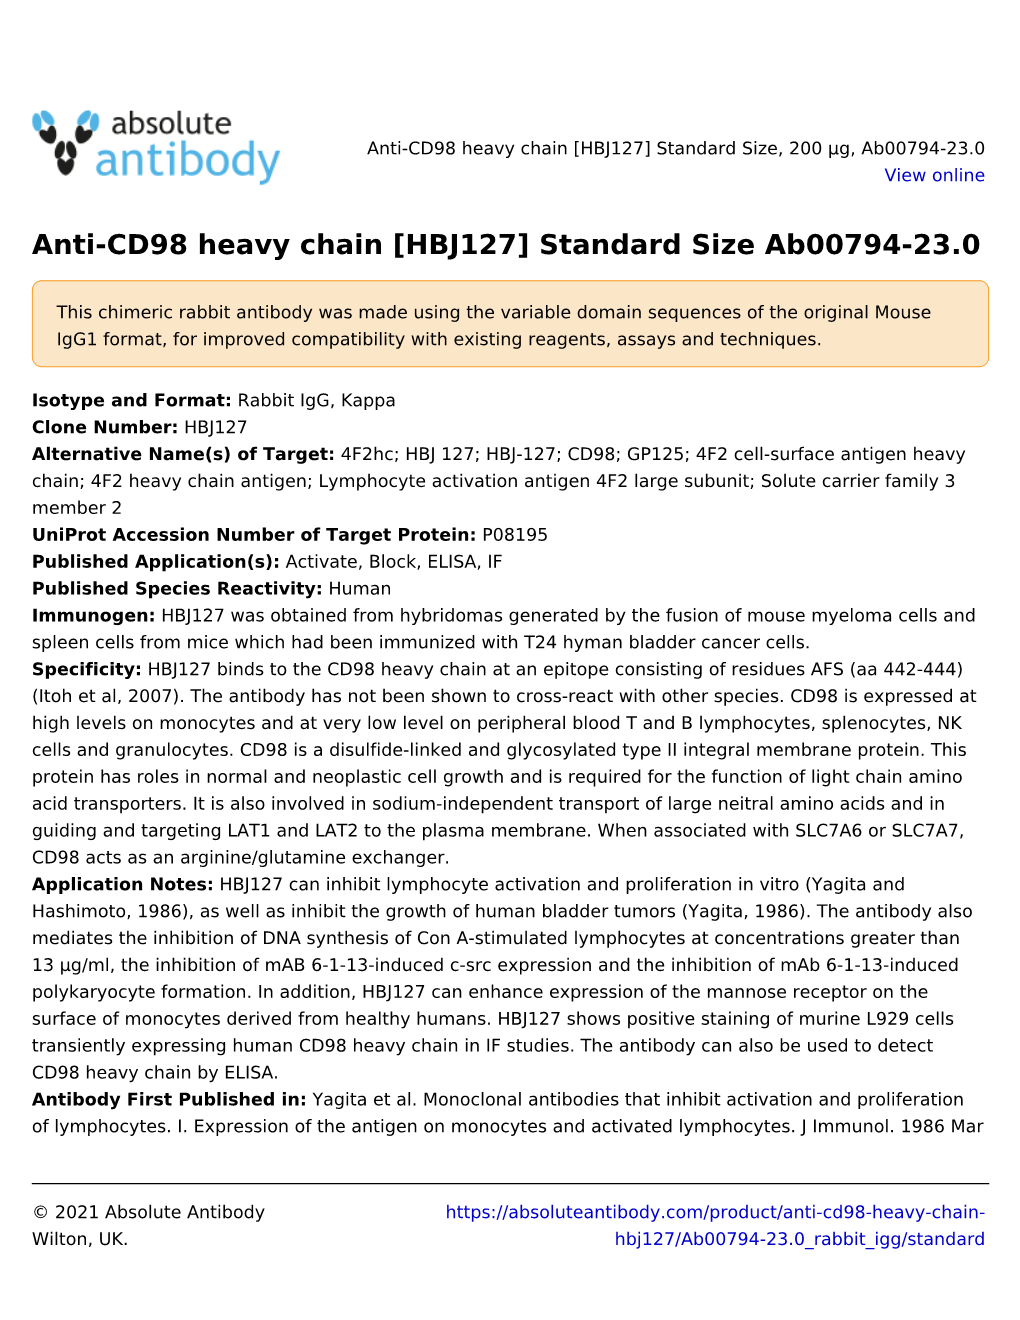 Anti-CD98 Heavy Chain [HBJ127] Standard Size, 200 Μg, Ab00794-23.0 View Online